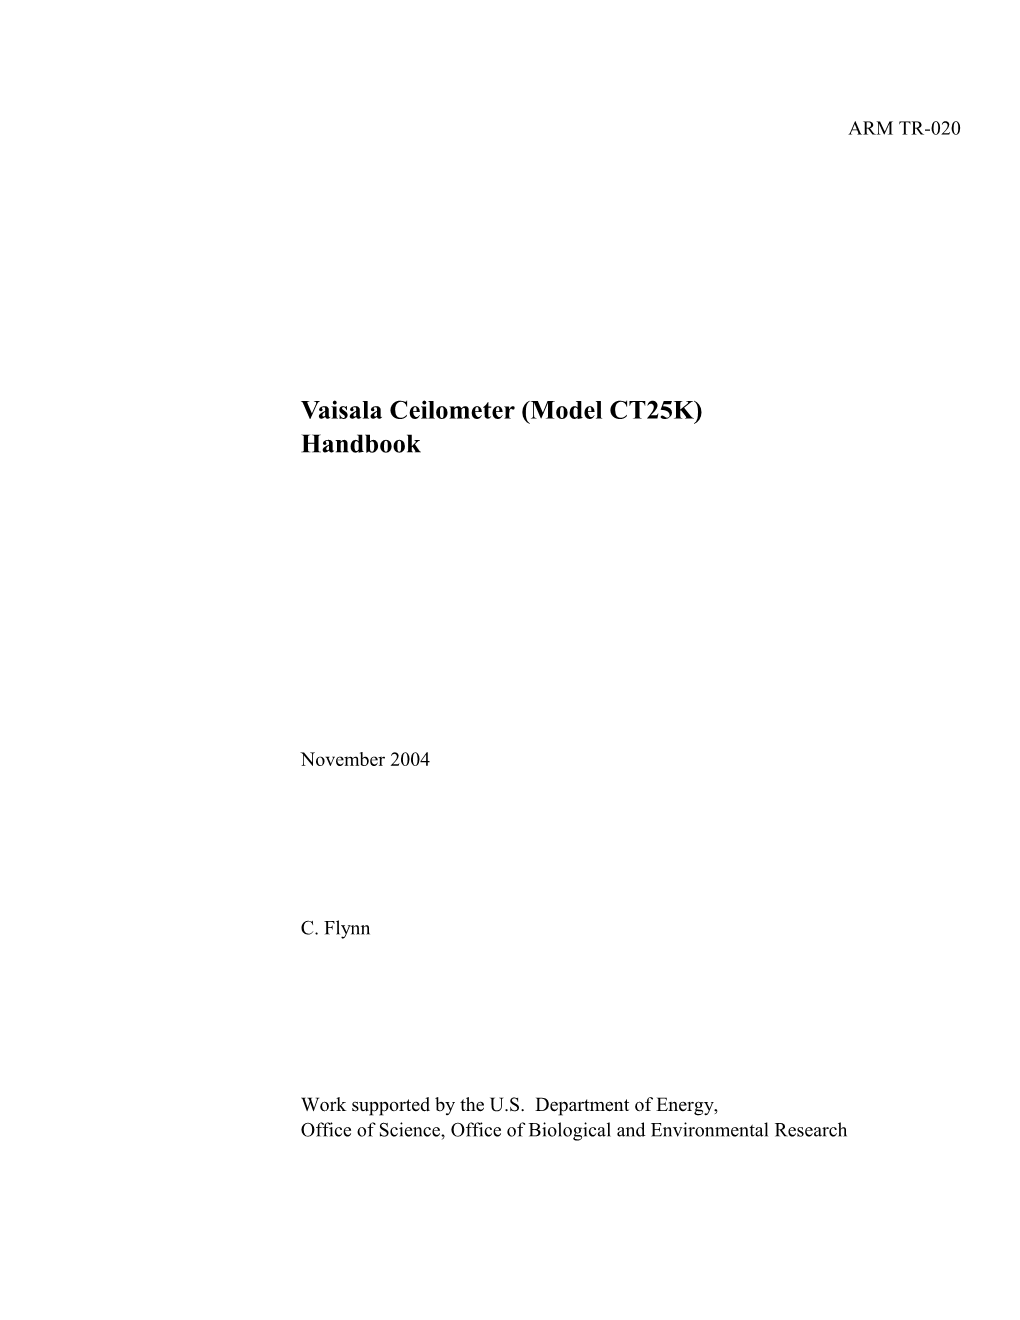 Vaisala Ceilometer (Model CT25K)Handbook